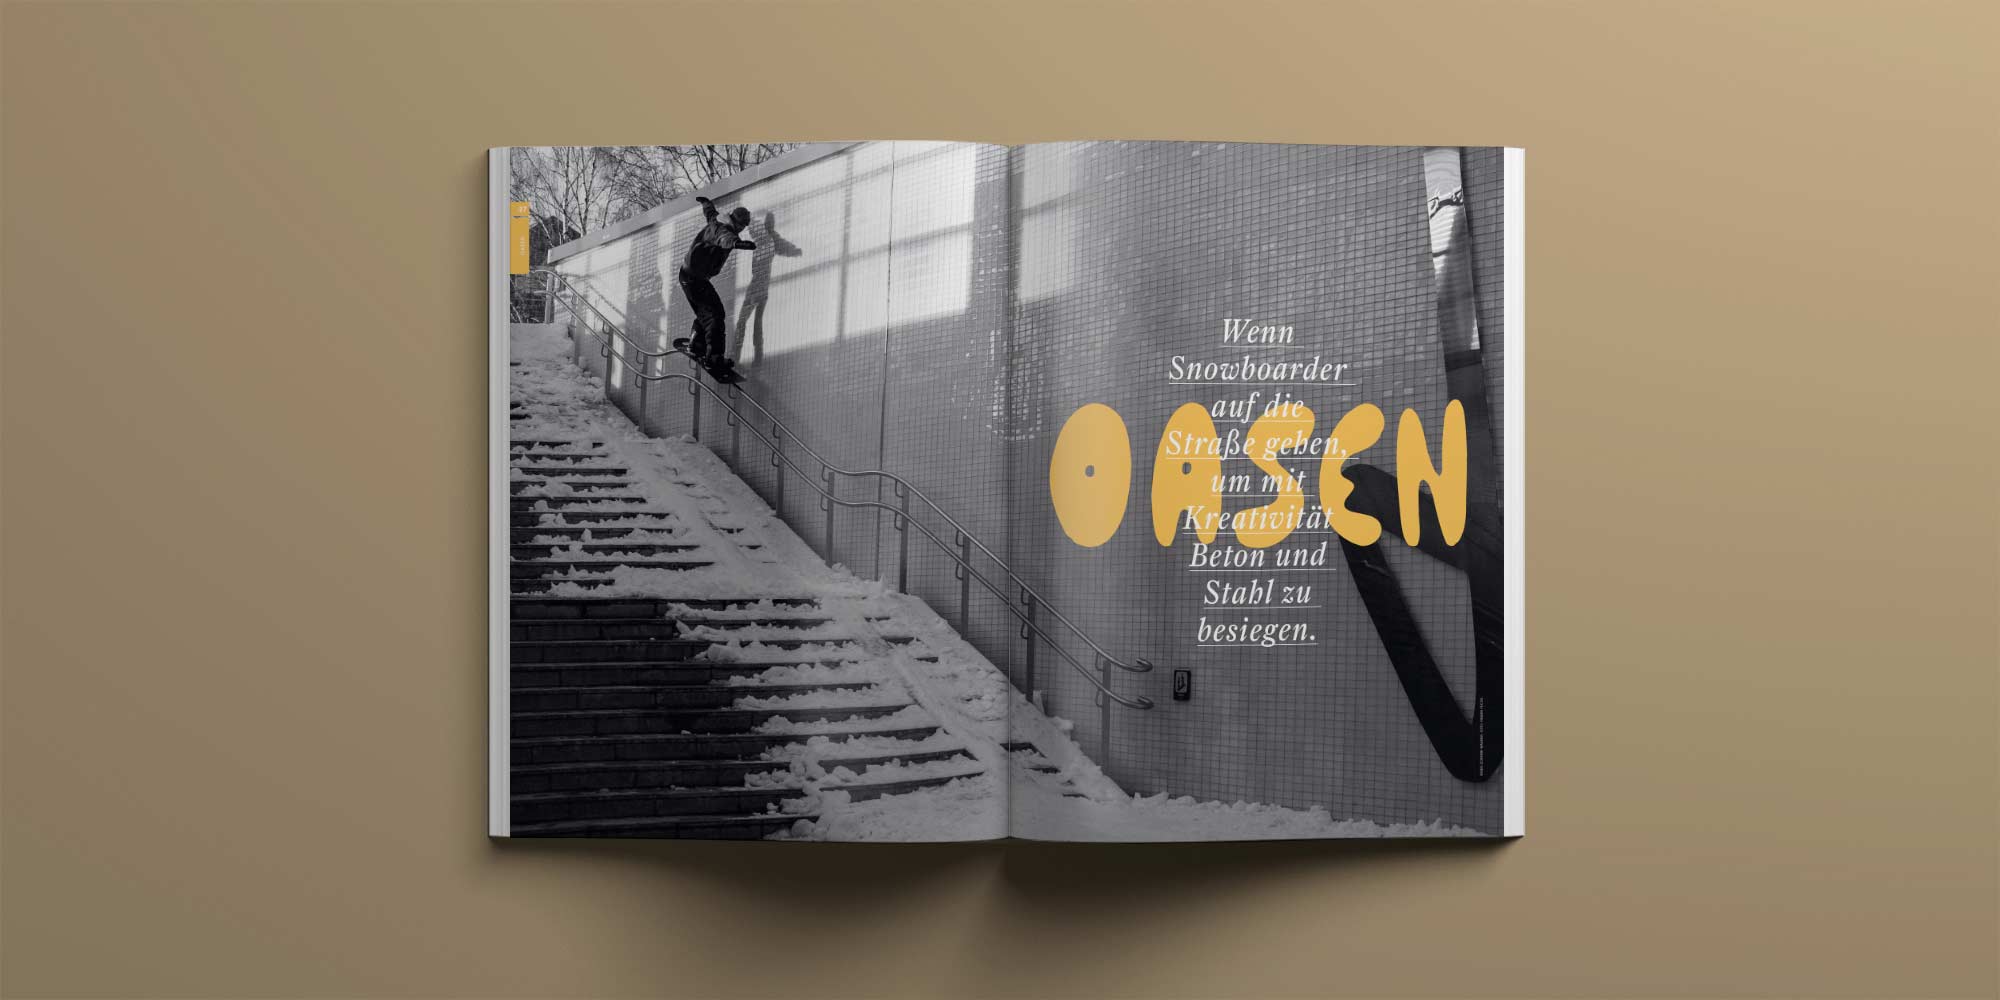 PRIME Snowboarding Magazine #27 - OASEN